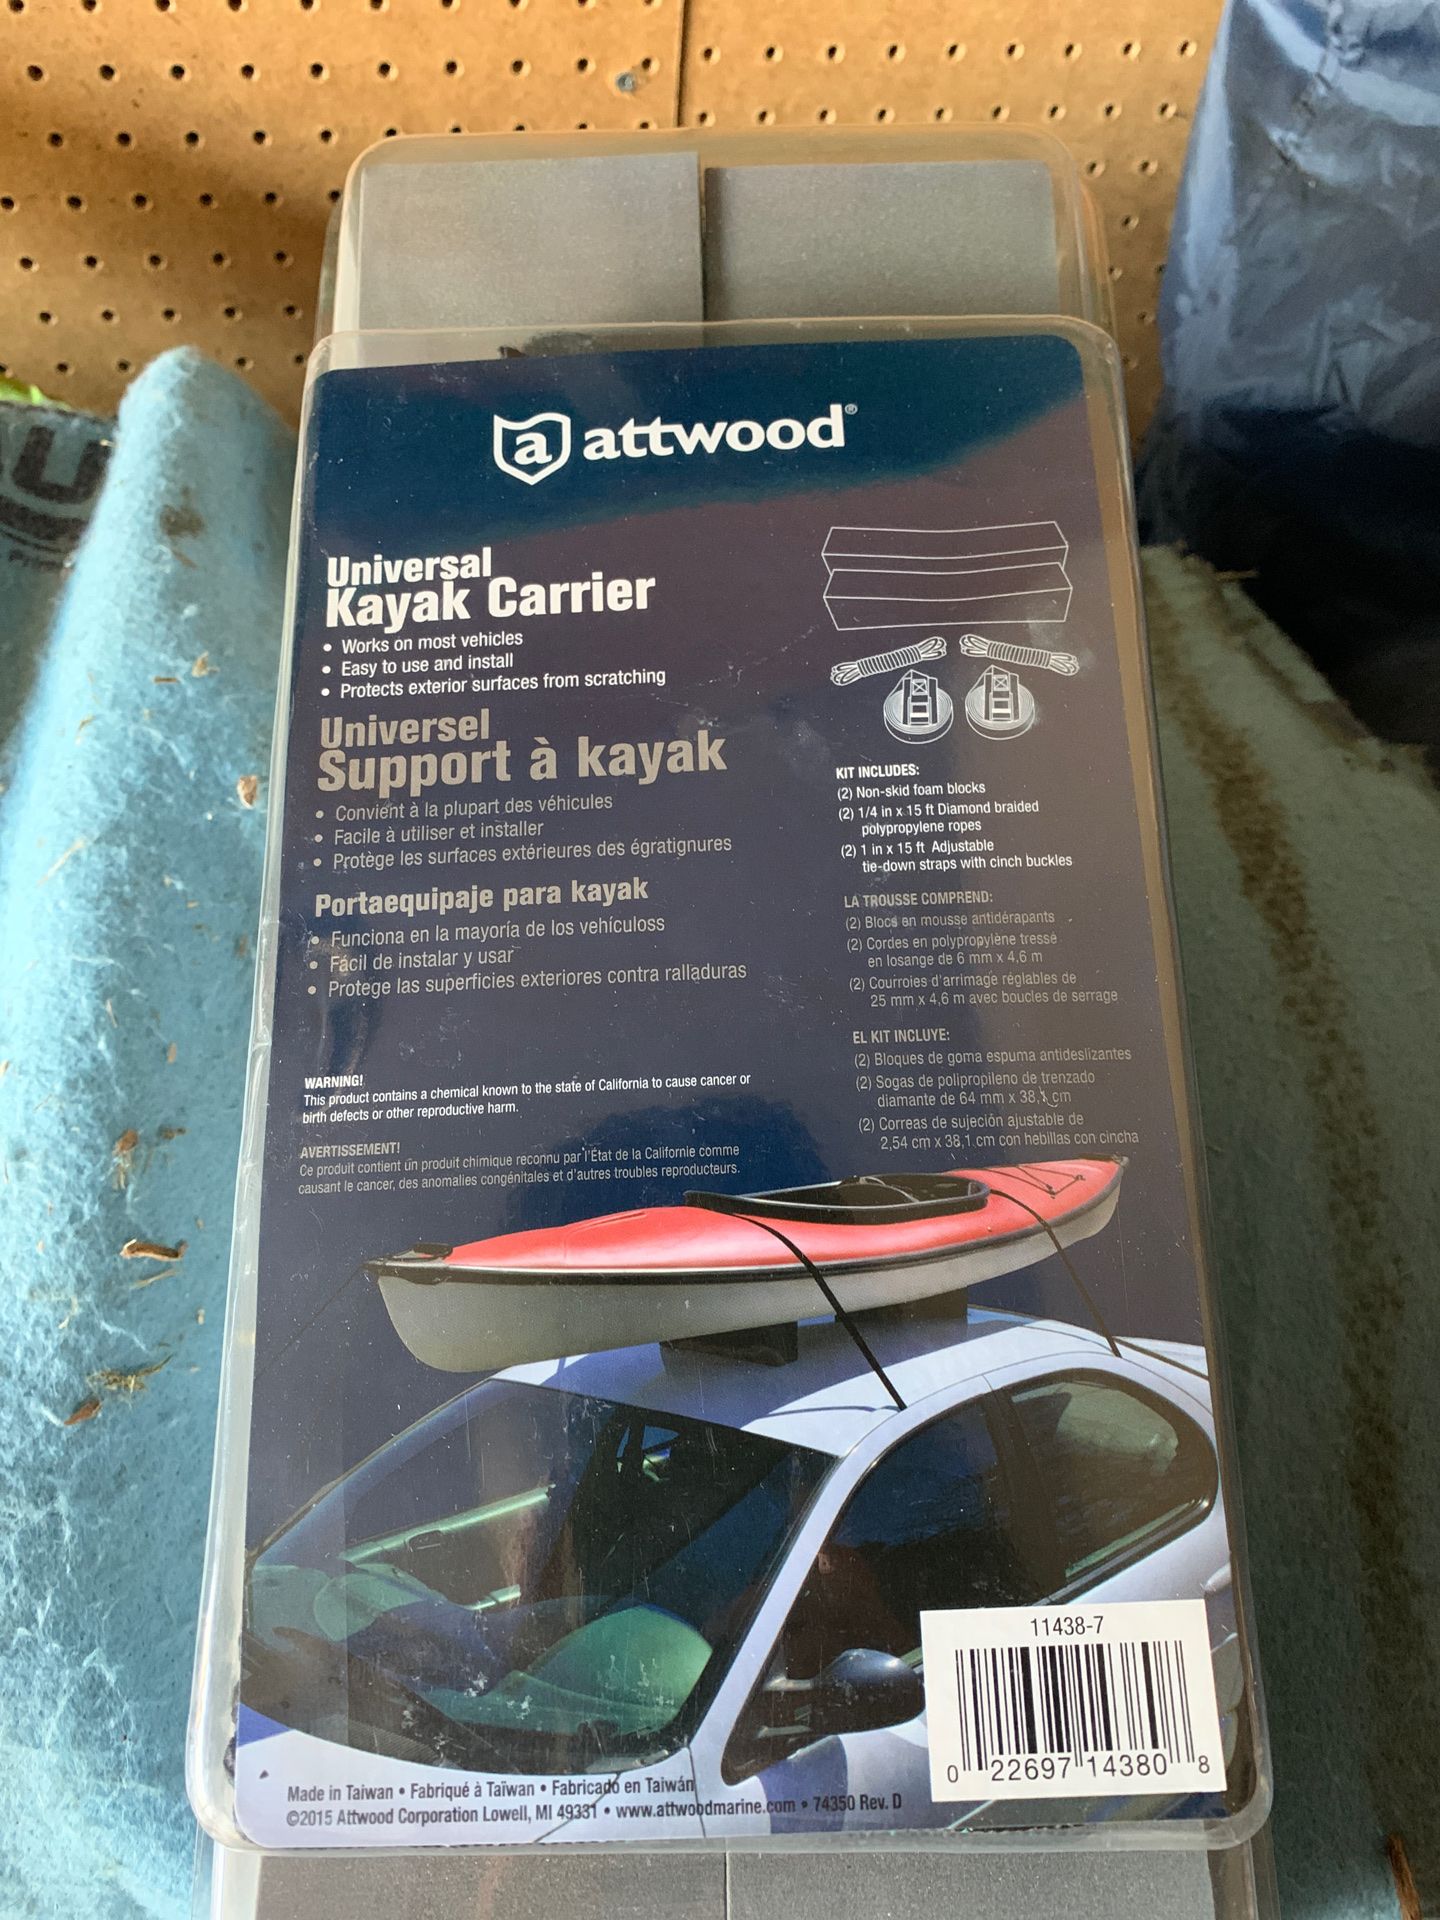 Attwood Universal Kayak Car Carrier